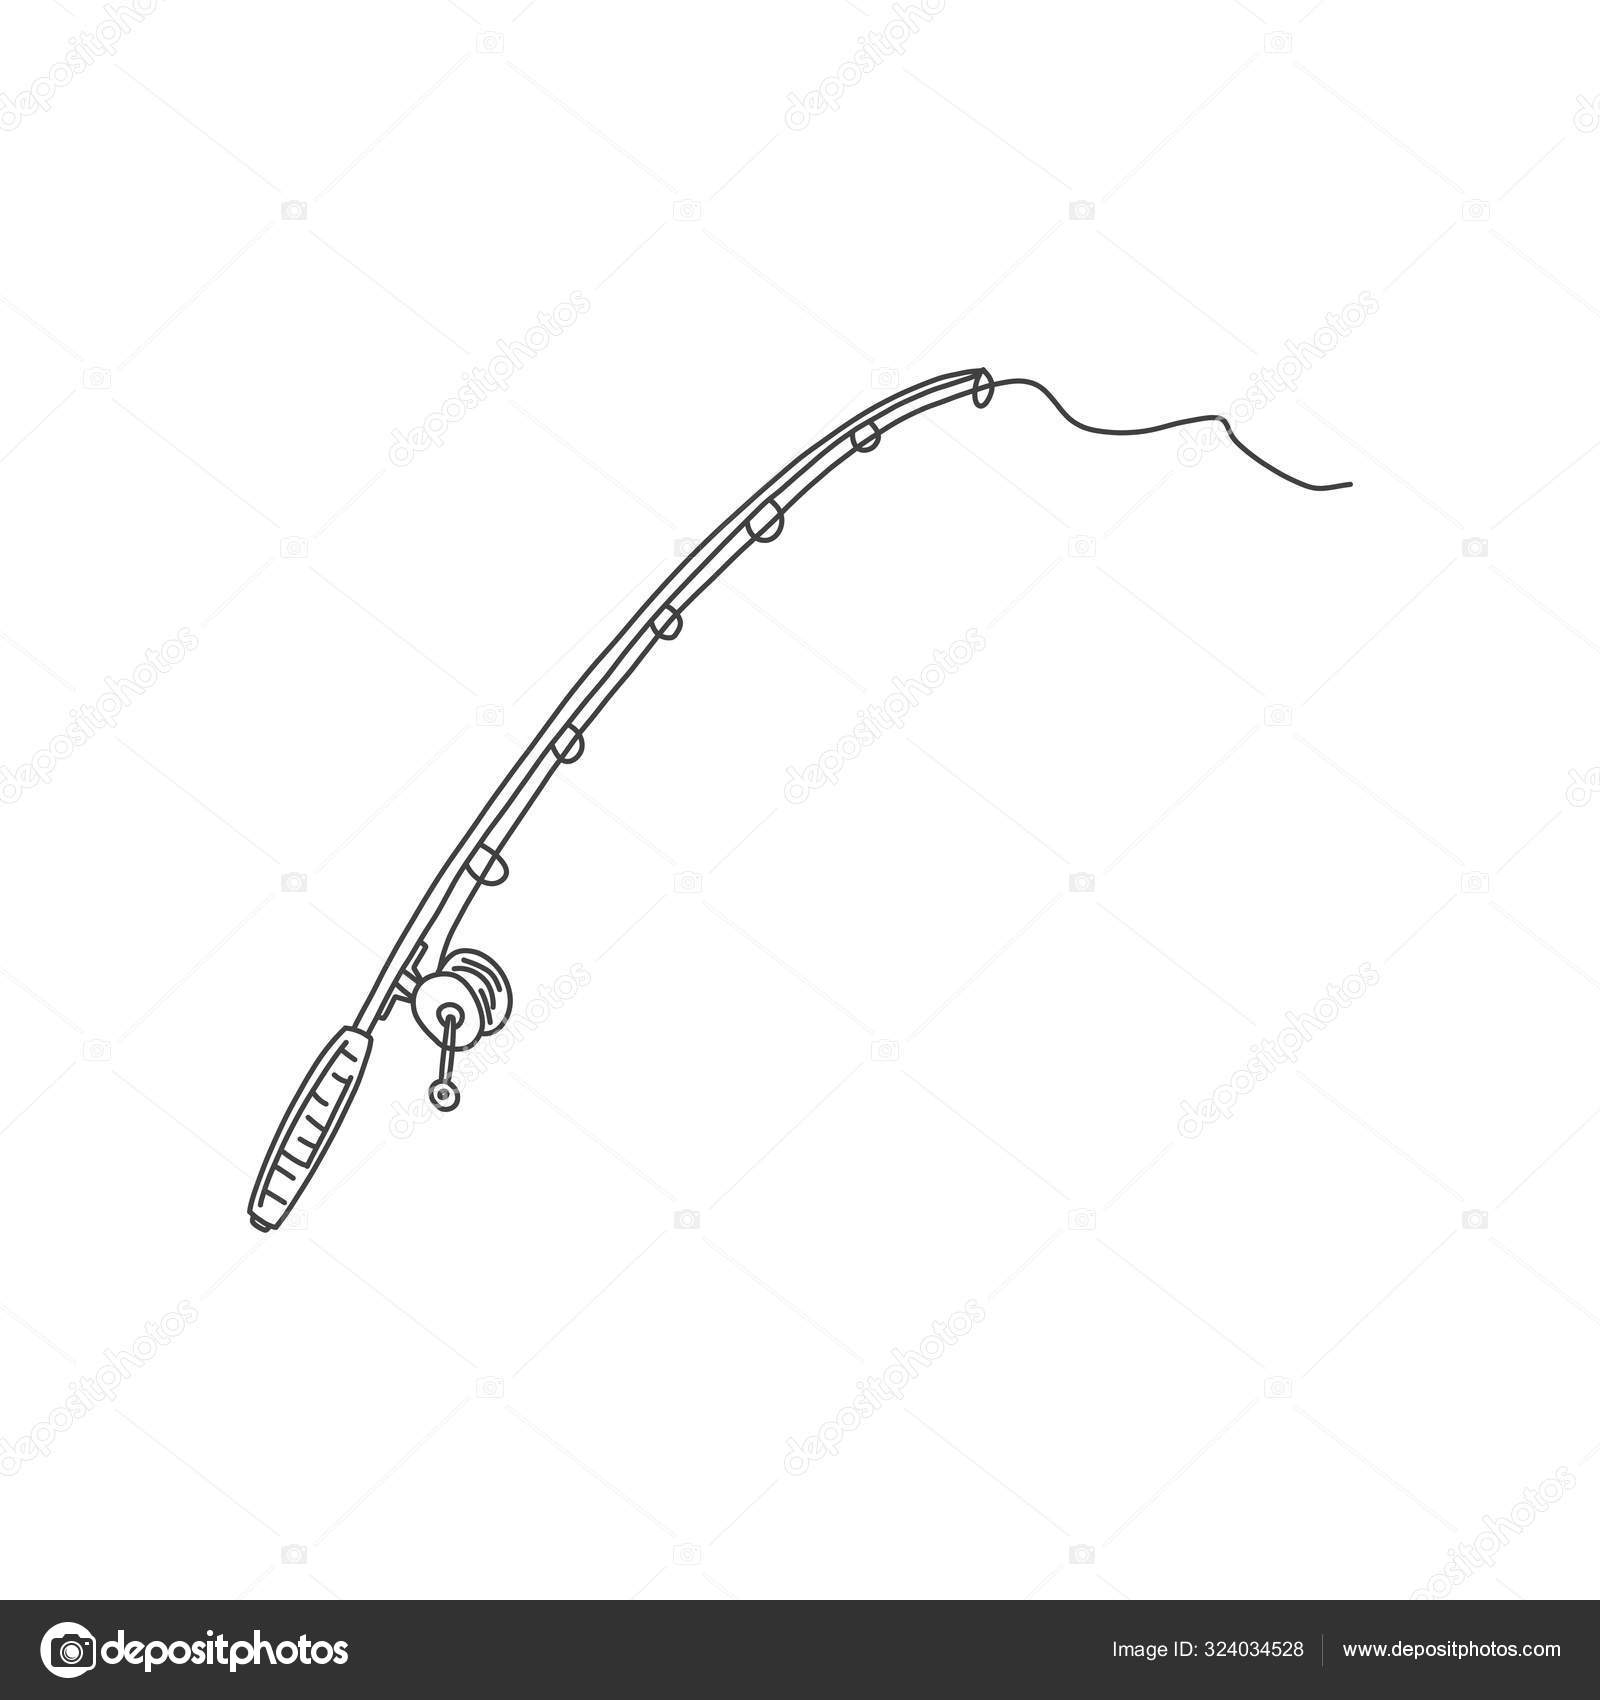 https://st3.depositphotos.com/8601140/32403/v/1600/depositphotos_324034528-stock-illustration-united-fishing-rod-sketch-hand.jpg